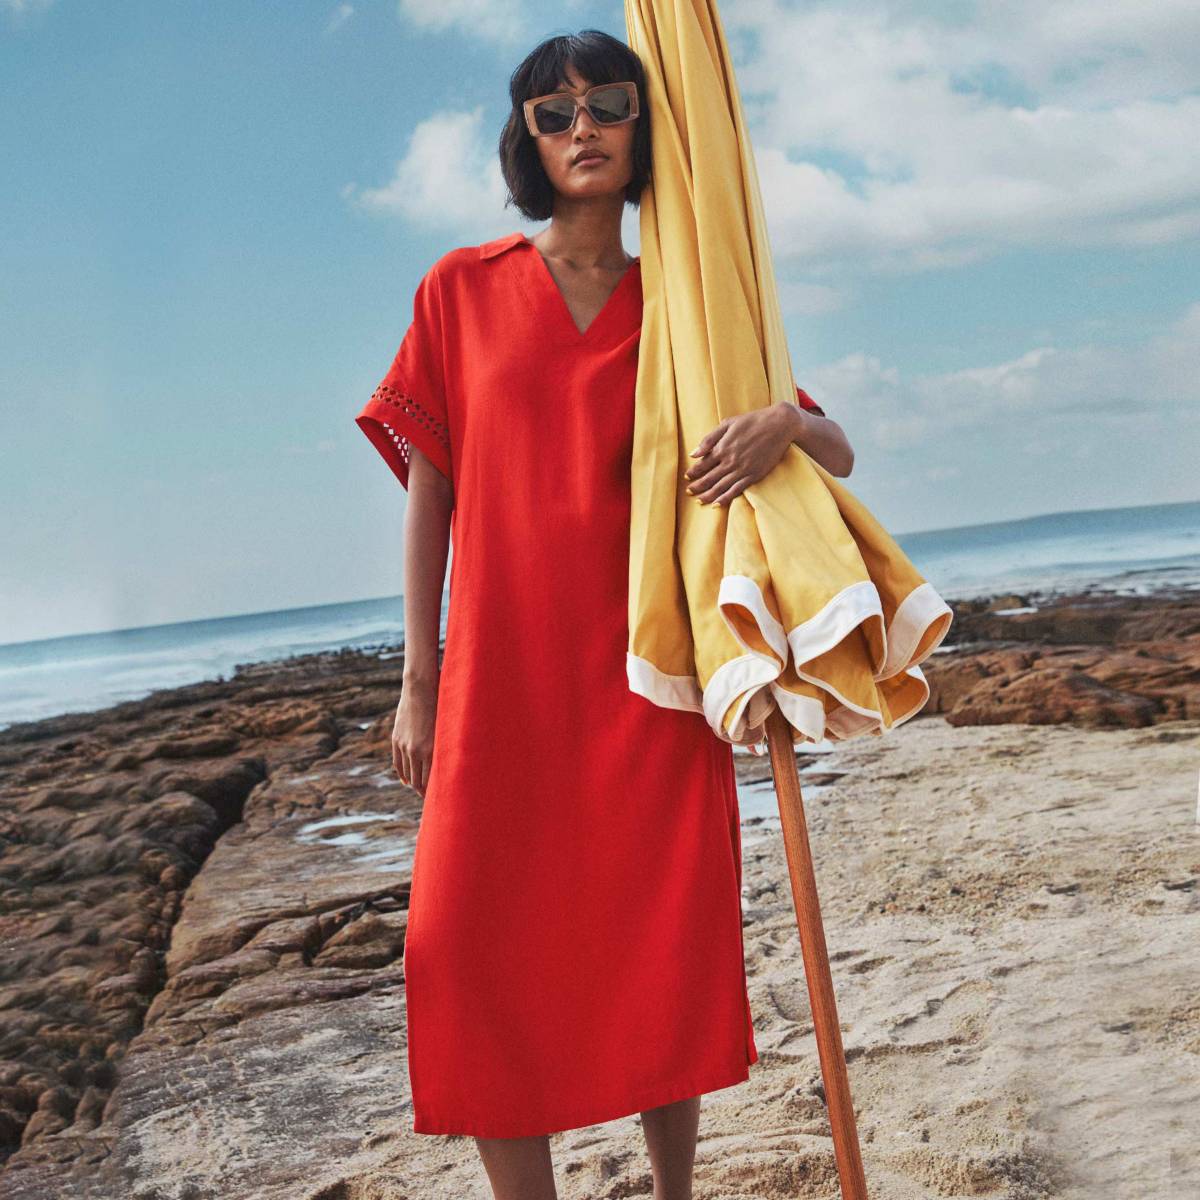  Woman wearing red beach dress